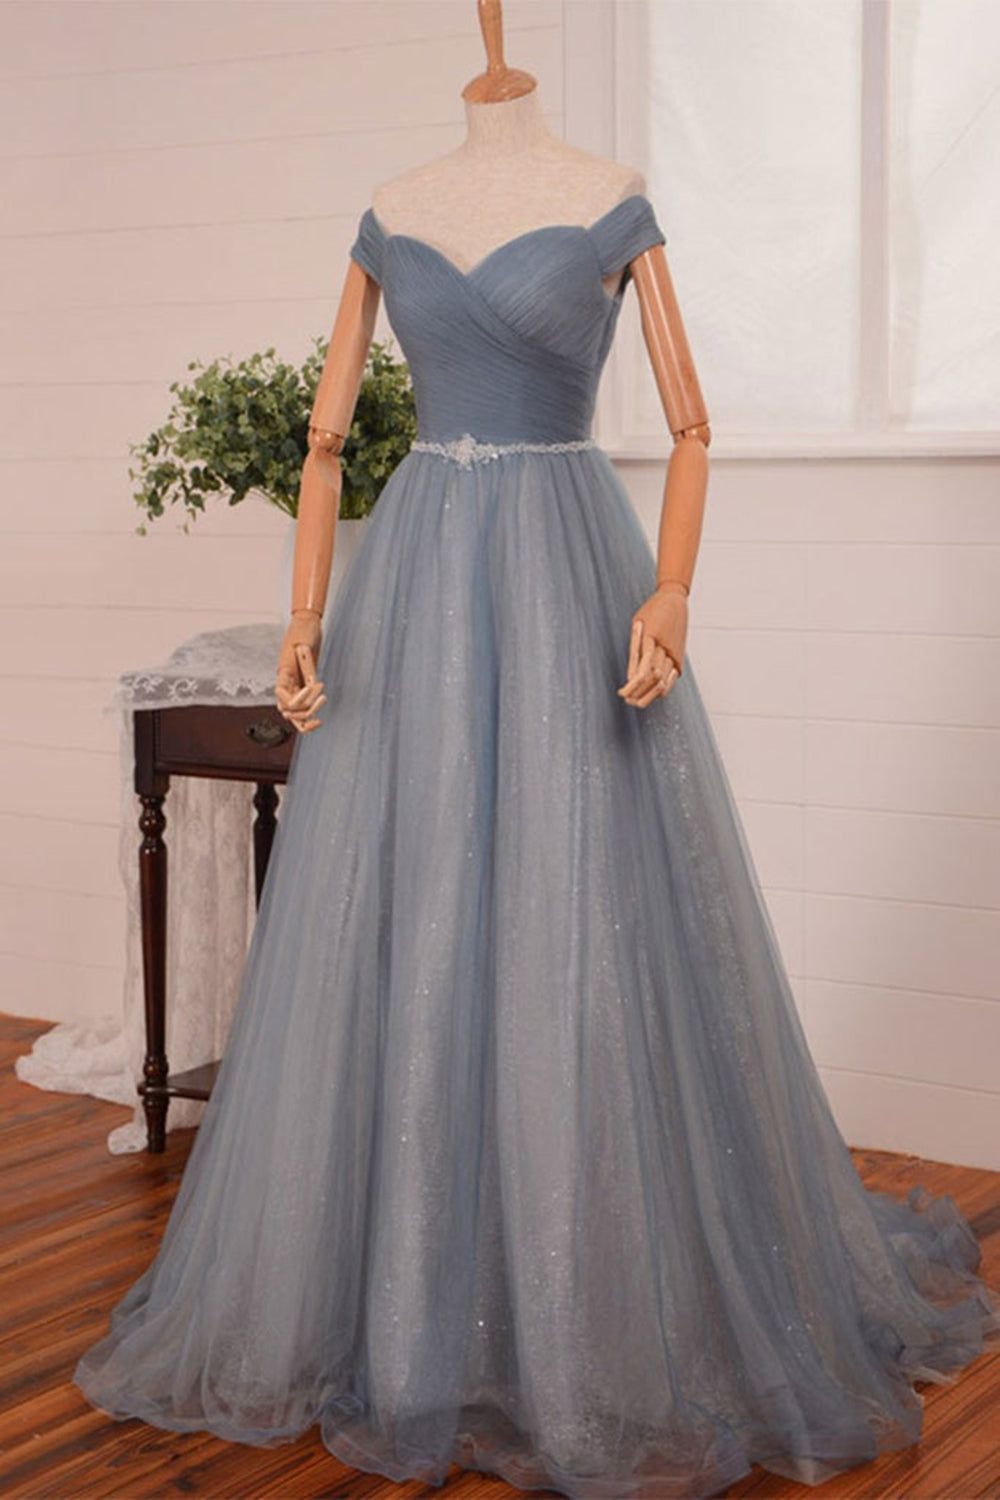 Simple Off Shoulder Gray Tulle Long Prom Dresses with Belt, Off the Shoulder Gray Formal Evening Dresses